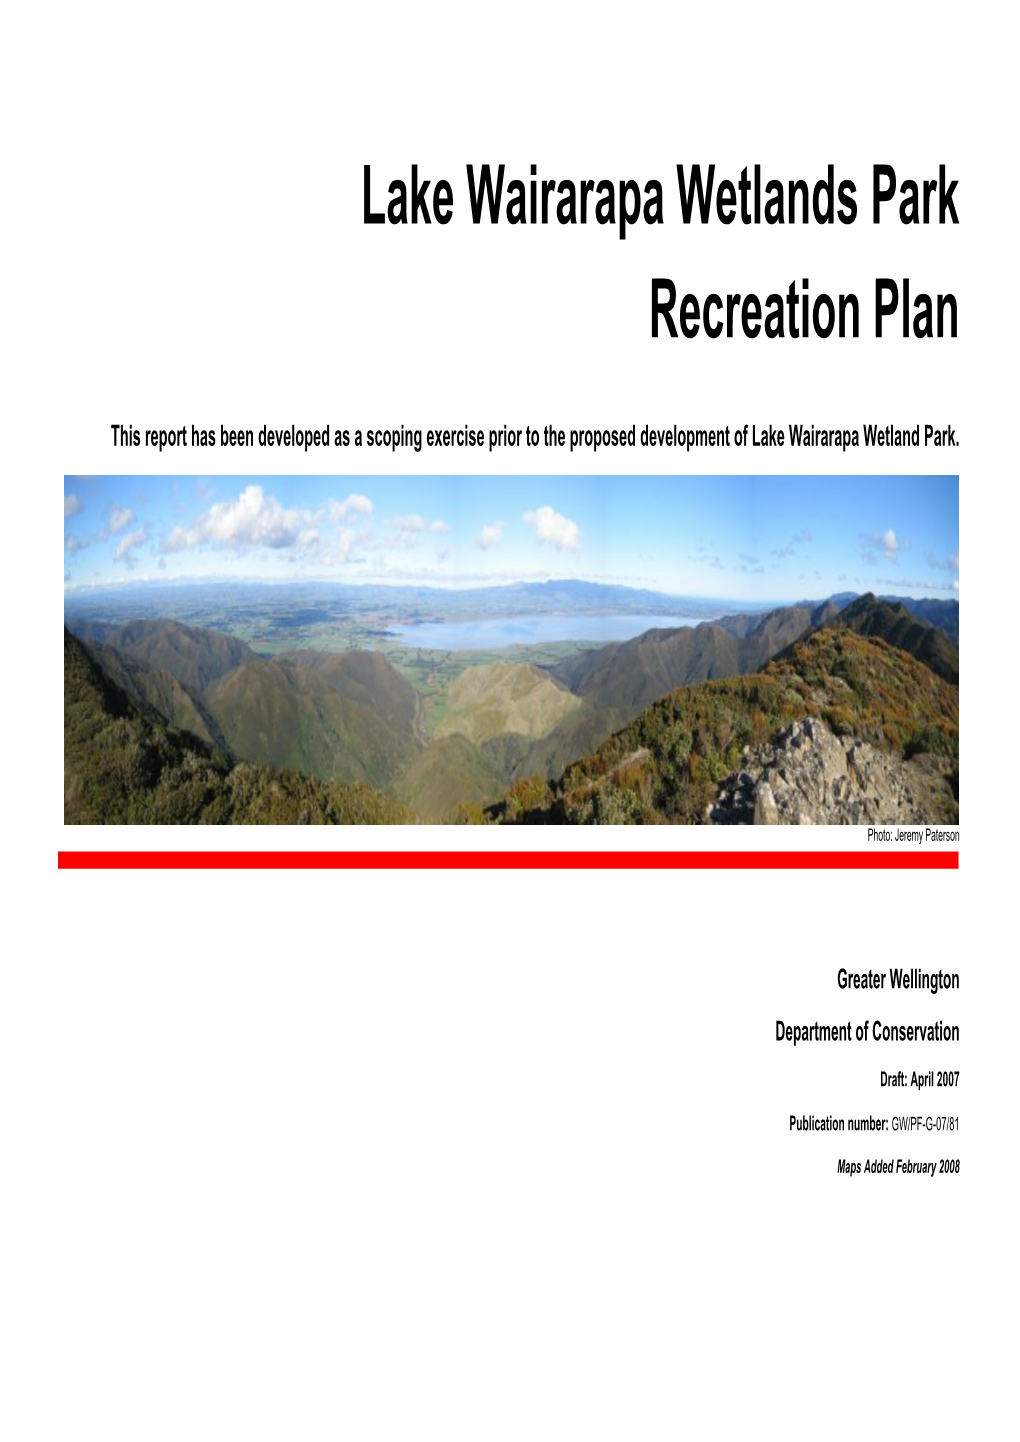 Lake Wairarapa Wetlands Park Recreation Plan